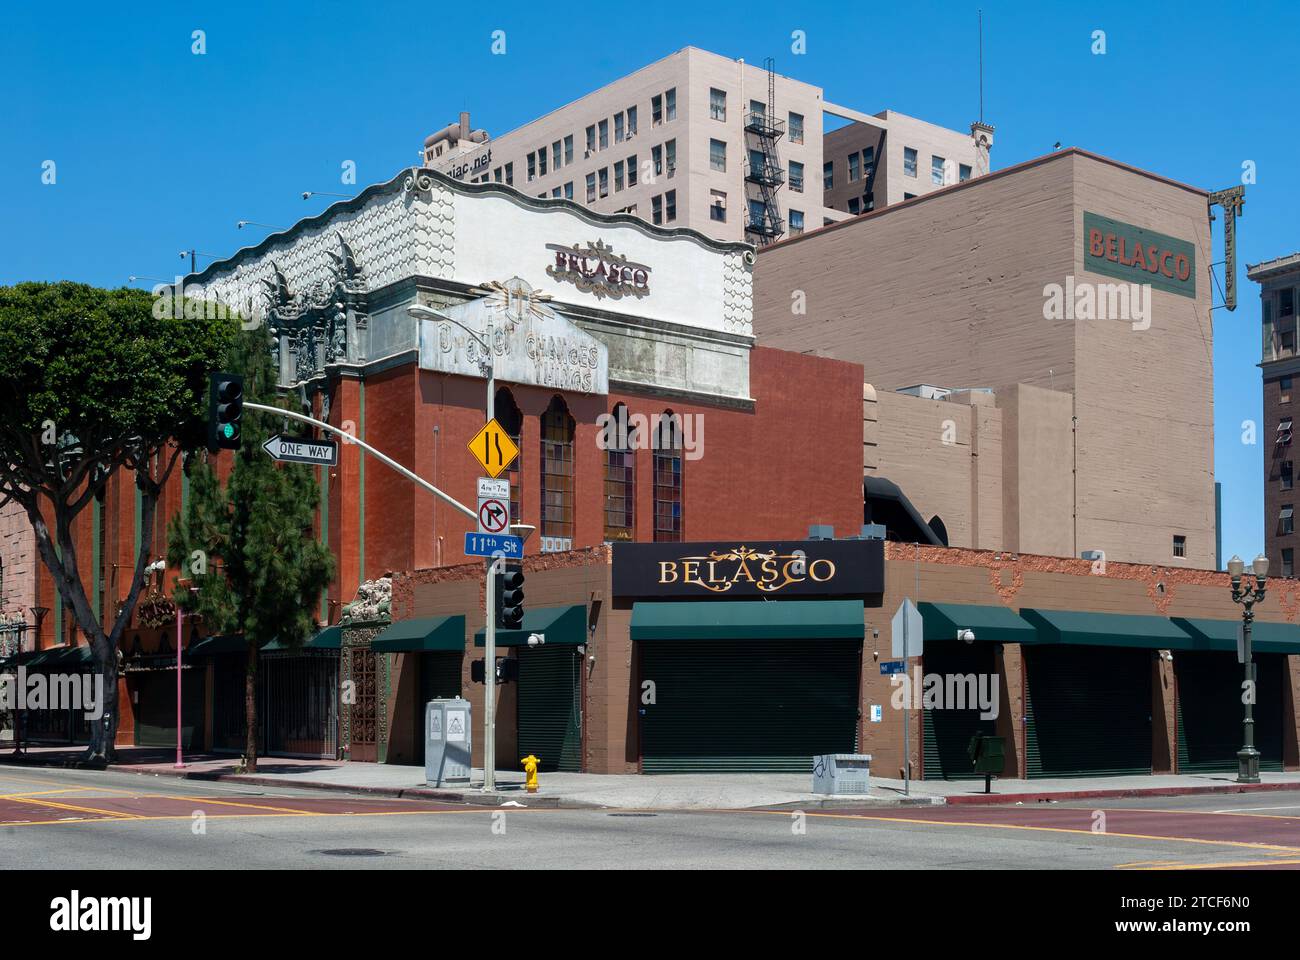 Das Belasco Hotel in Los Angeles, USA. Stockfoto